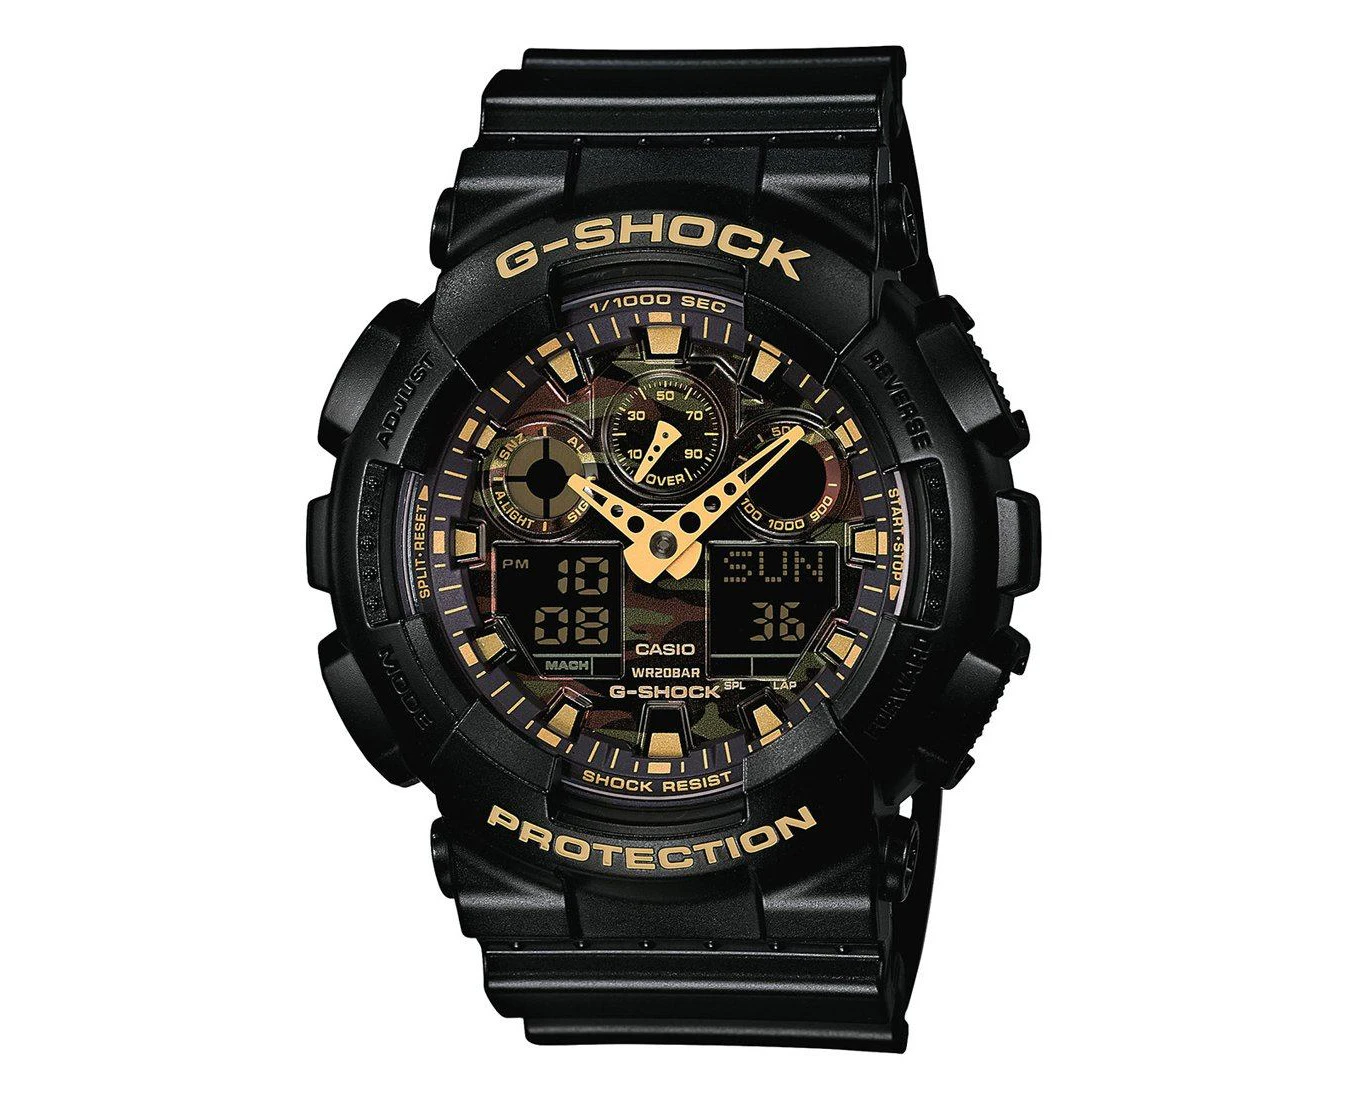 Casio G Shock Watch Gd 100gb 1 | Catch.com.au